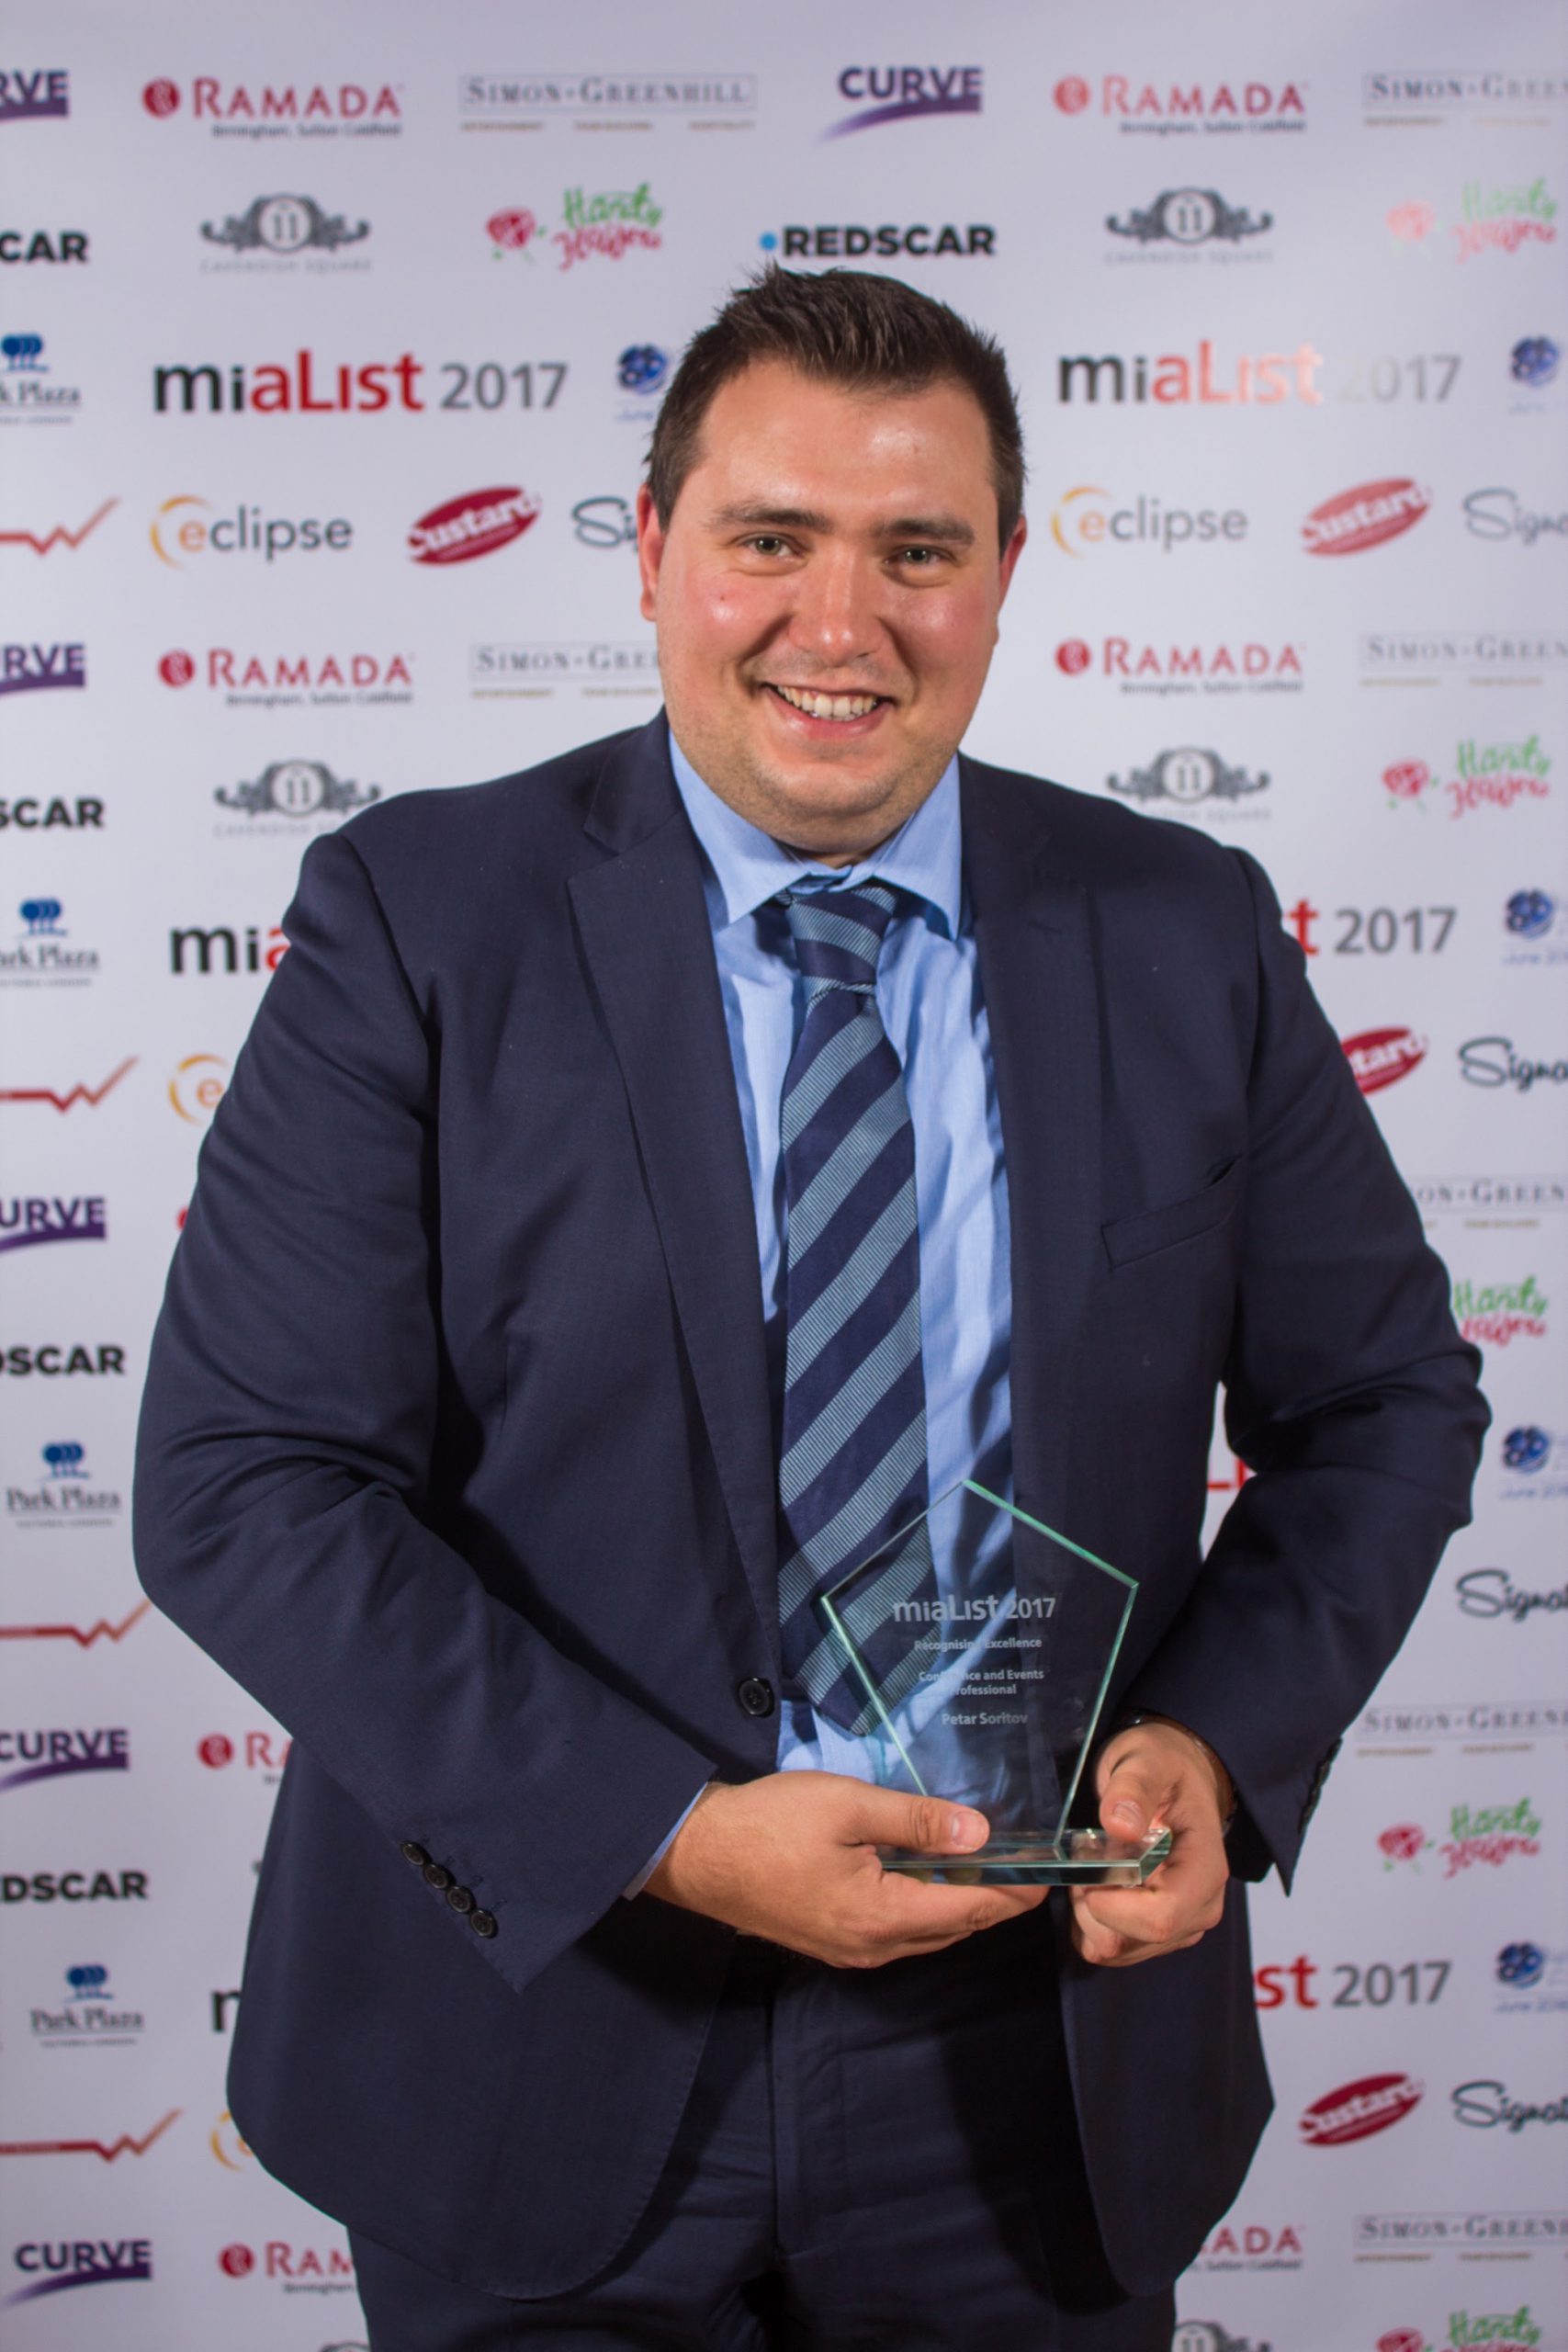 Luton Hoo Hotel’s Petar Sotirov wins prestigious miaList award